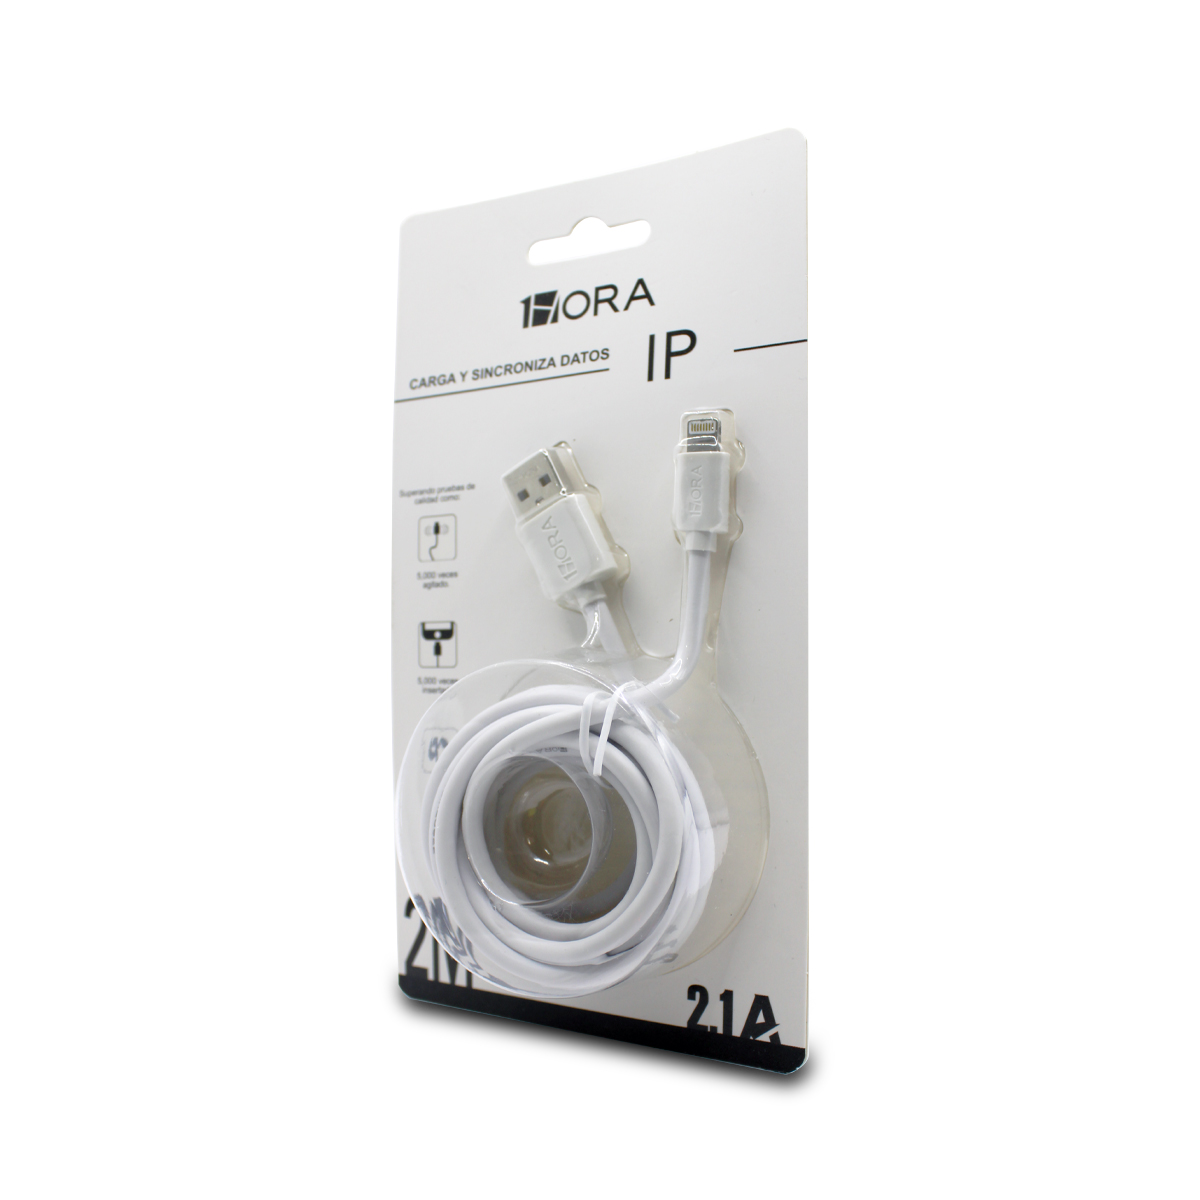 ohbox Cable de carga corto para iPhone, paquete de 3 cables Lightning de 12  pulgadas, cable de carga para iPhone de 1 pie, compatible con iPhone